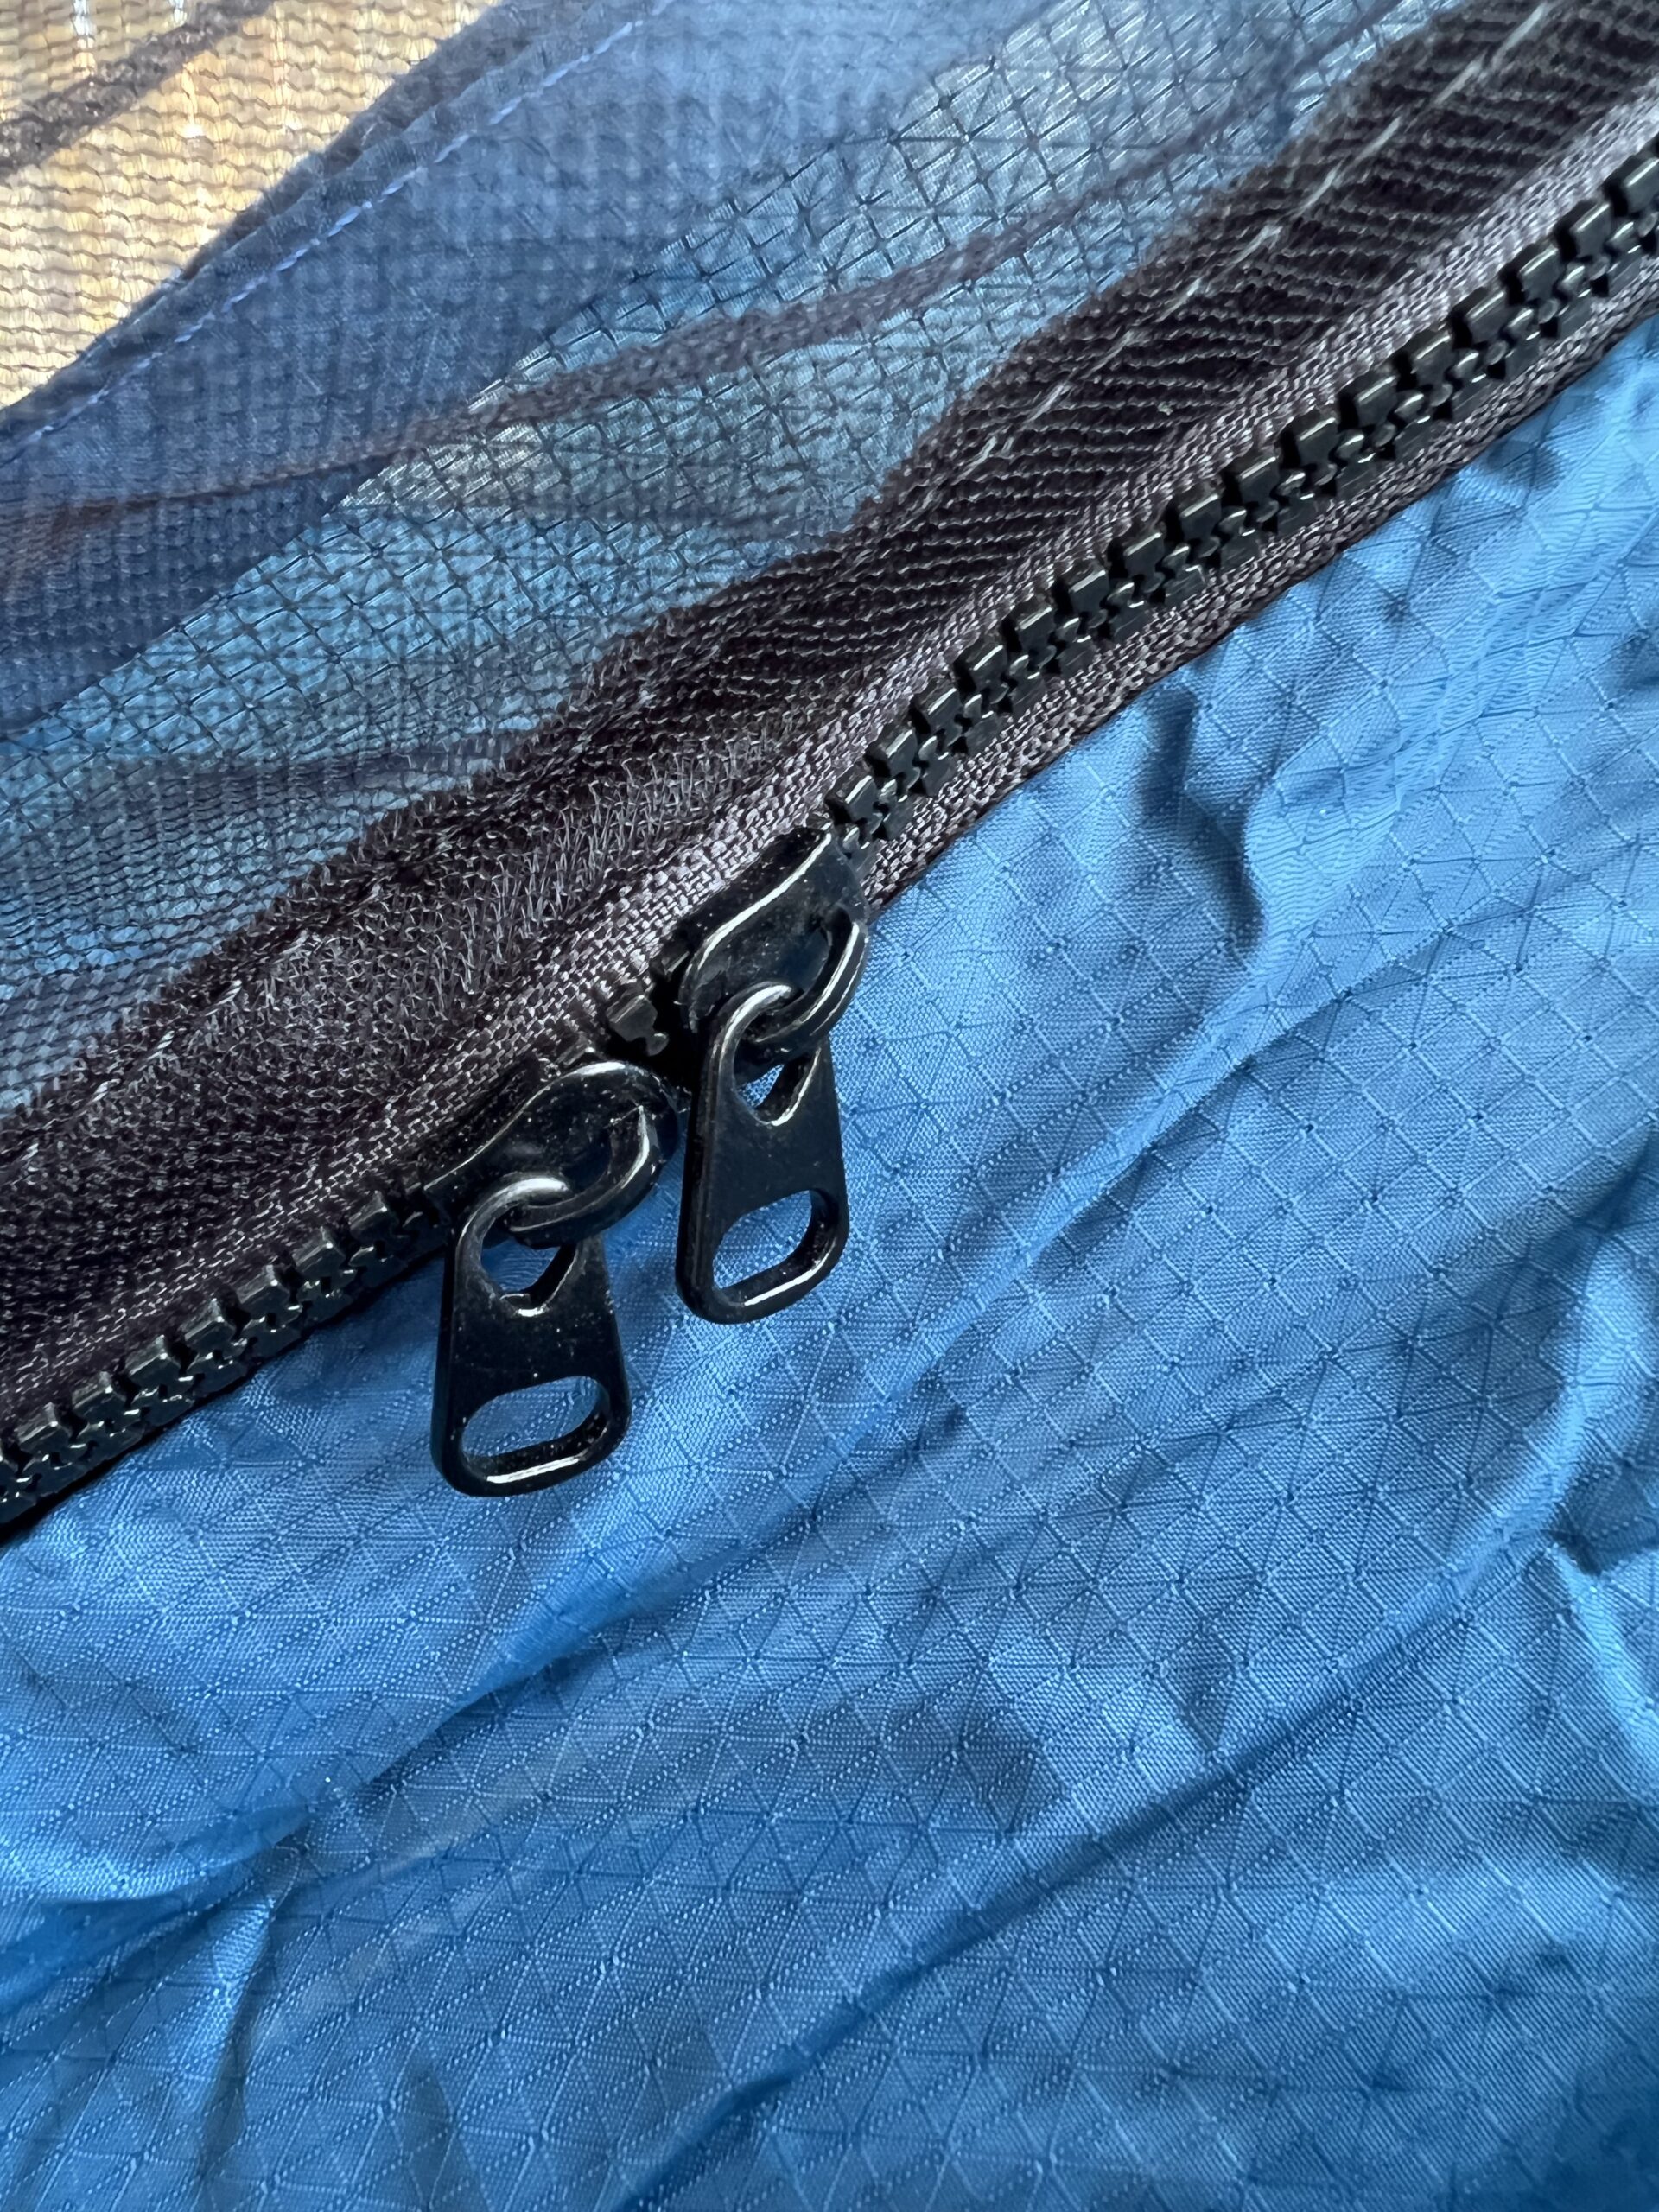 double zippers on hammock